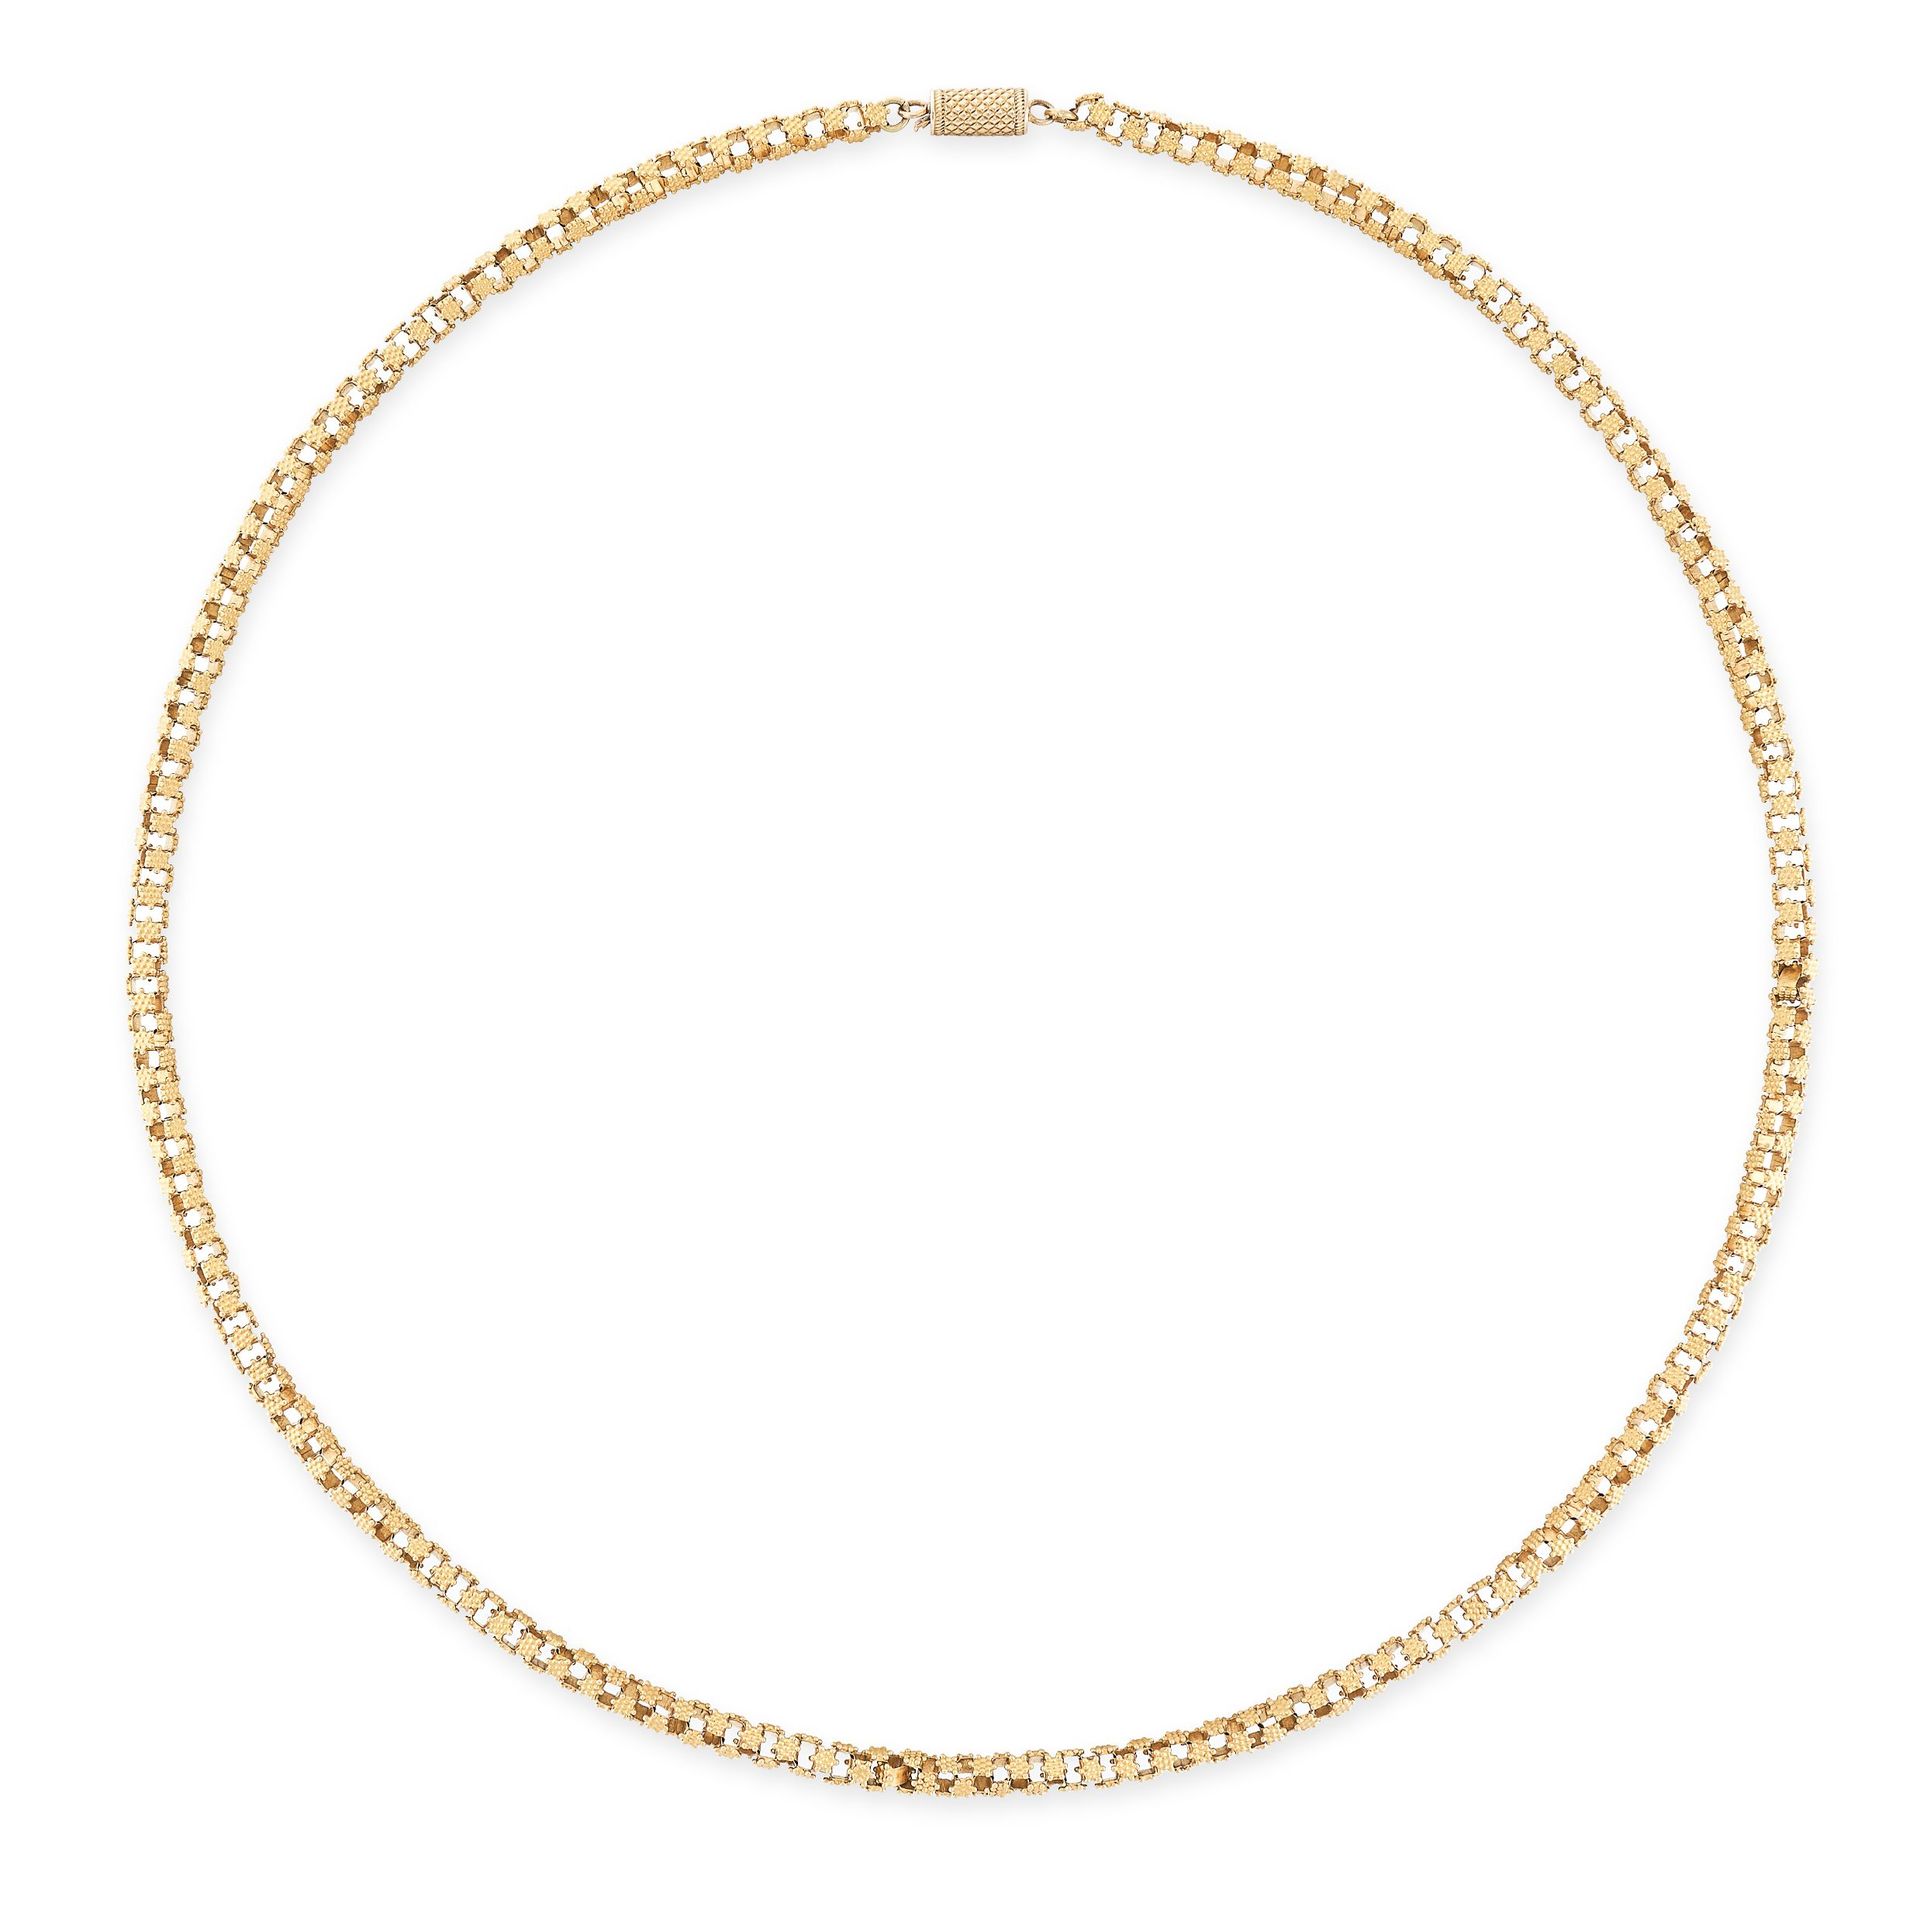 Null 一条19世纪的黄金TRICHINOPOLY链子项链，由一排点缀着珠子的星星的链子组成，放在一个桶状的扣子上，没有化验标记，44.5厘米，18.1克。